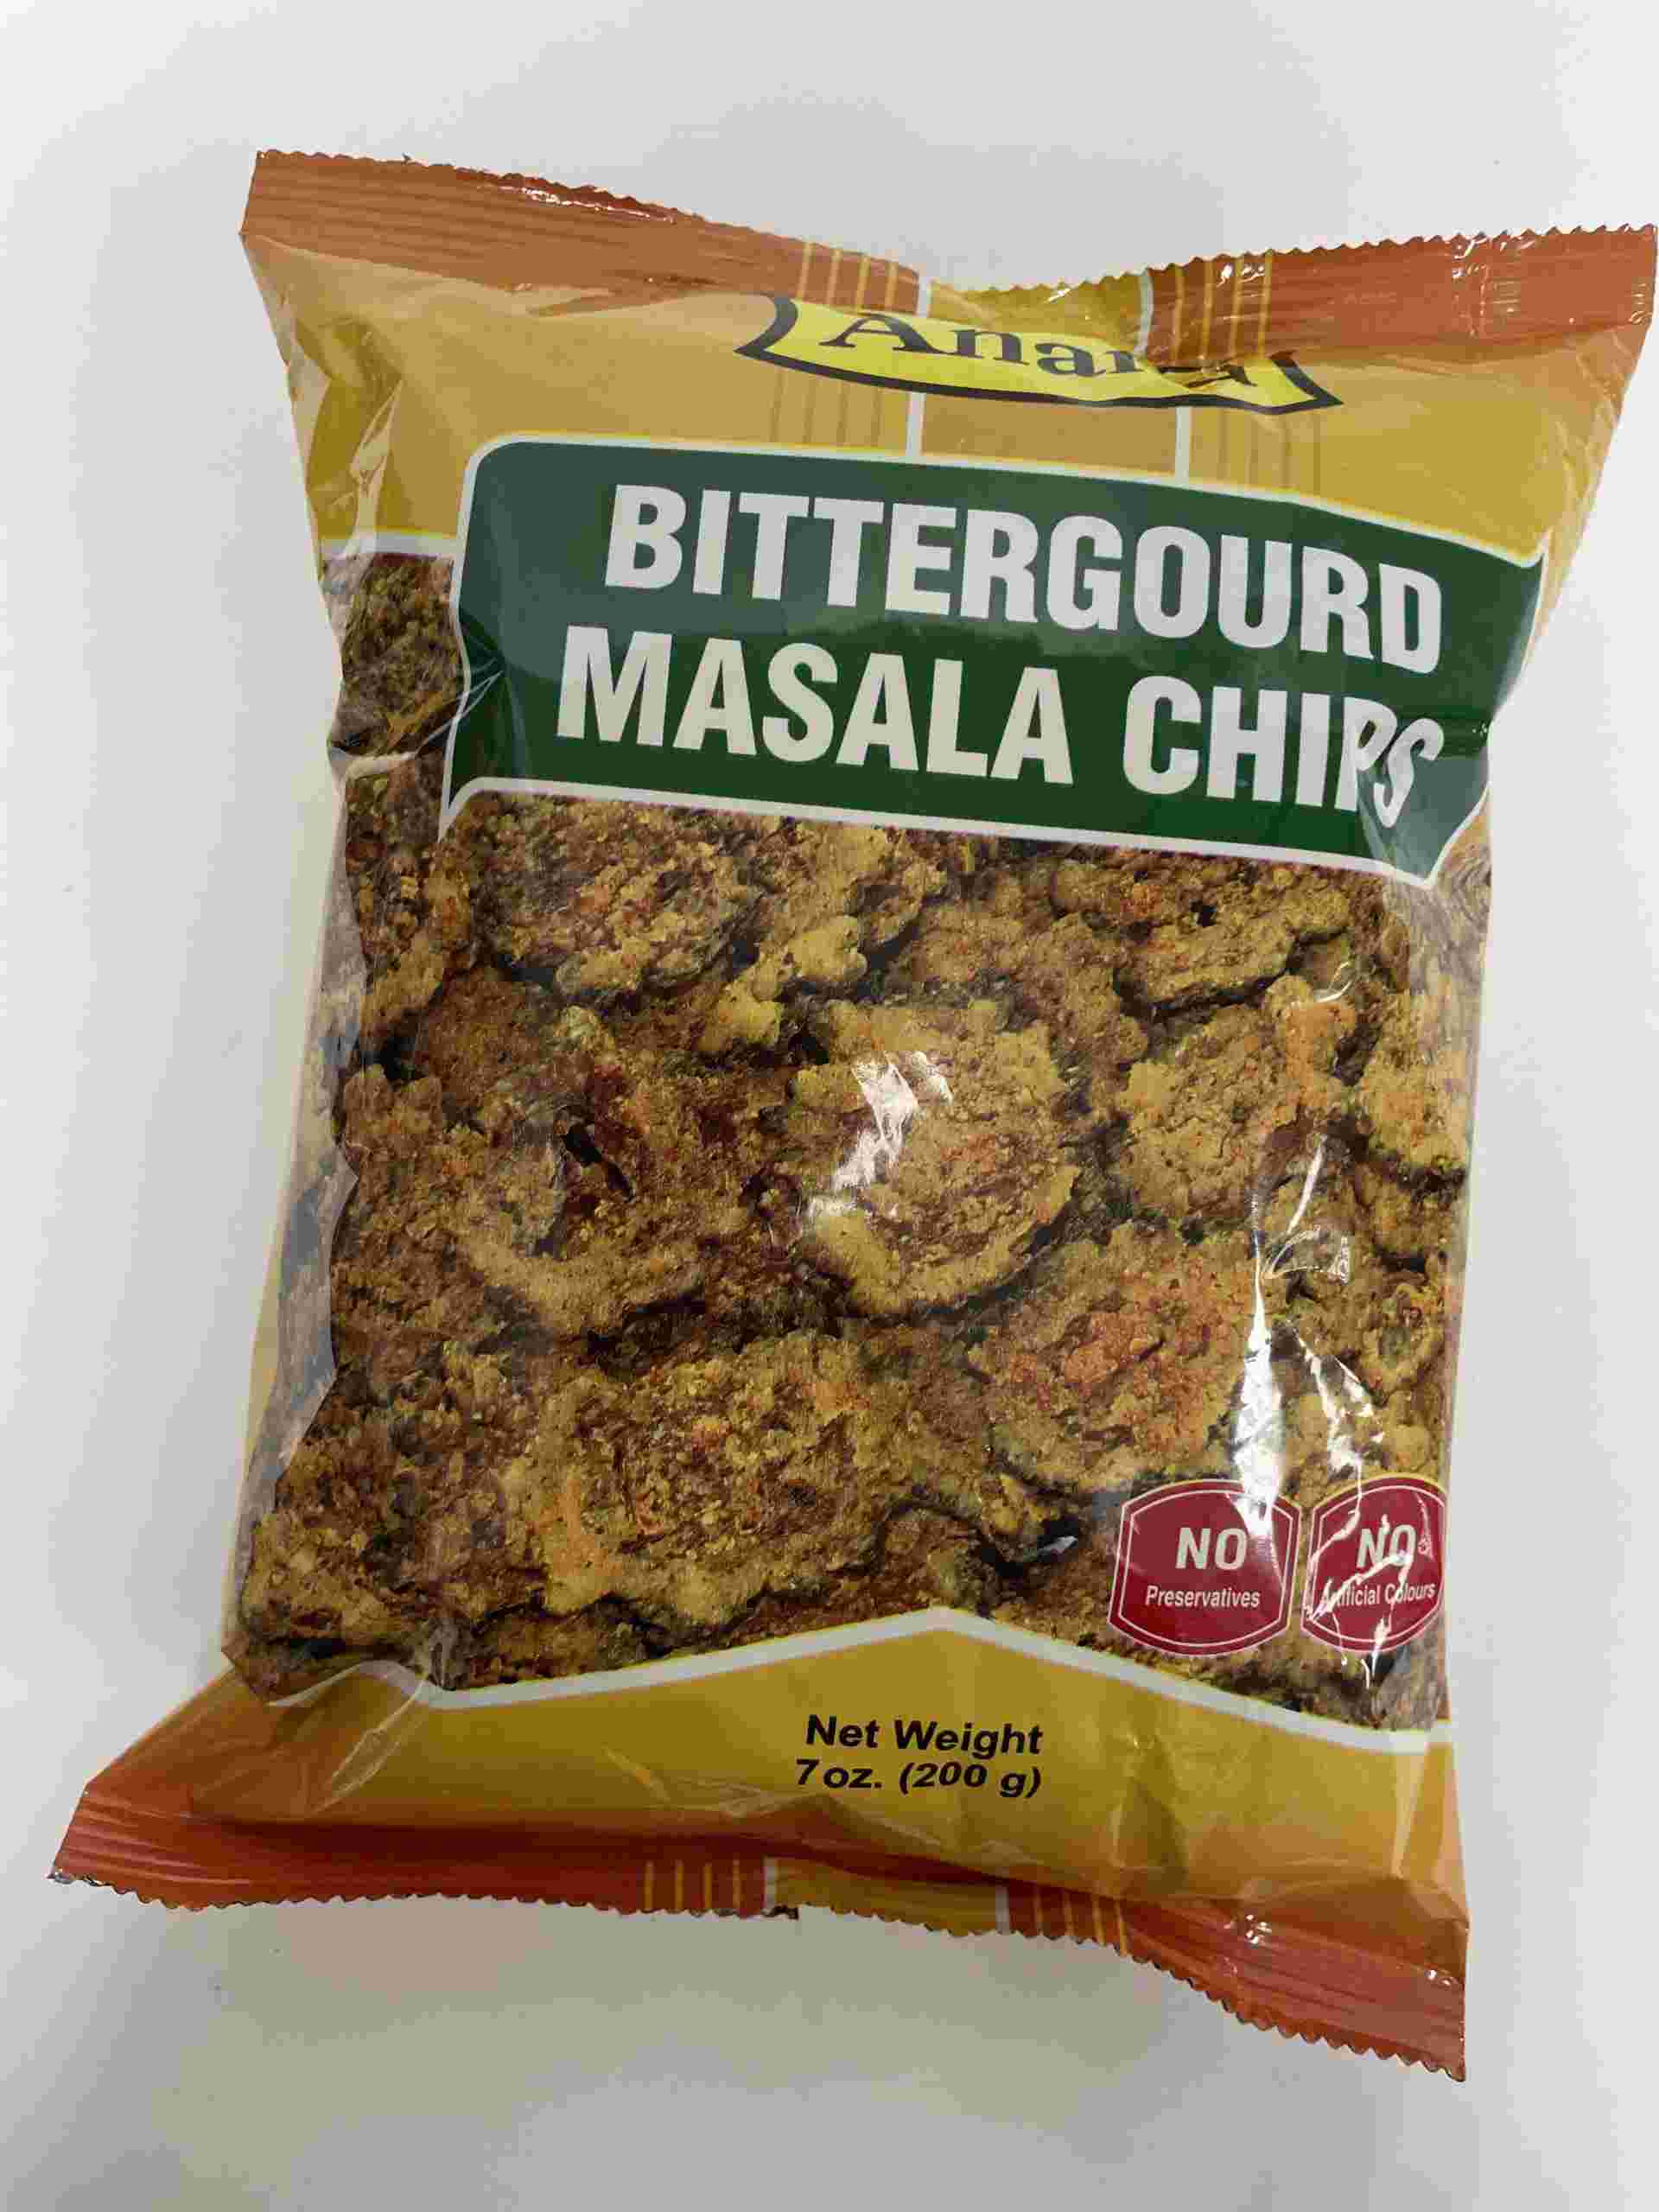 Anand Bittergourd Masala Chips